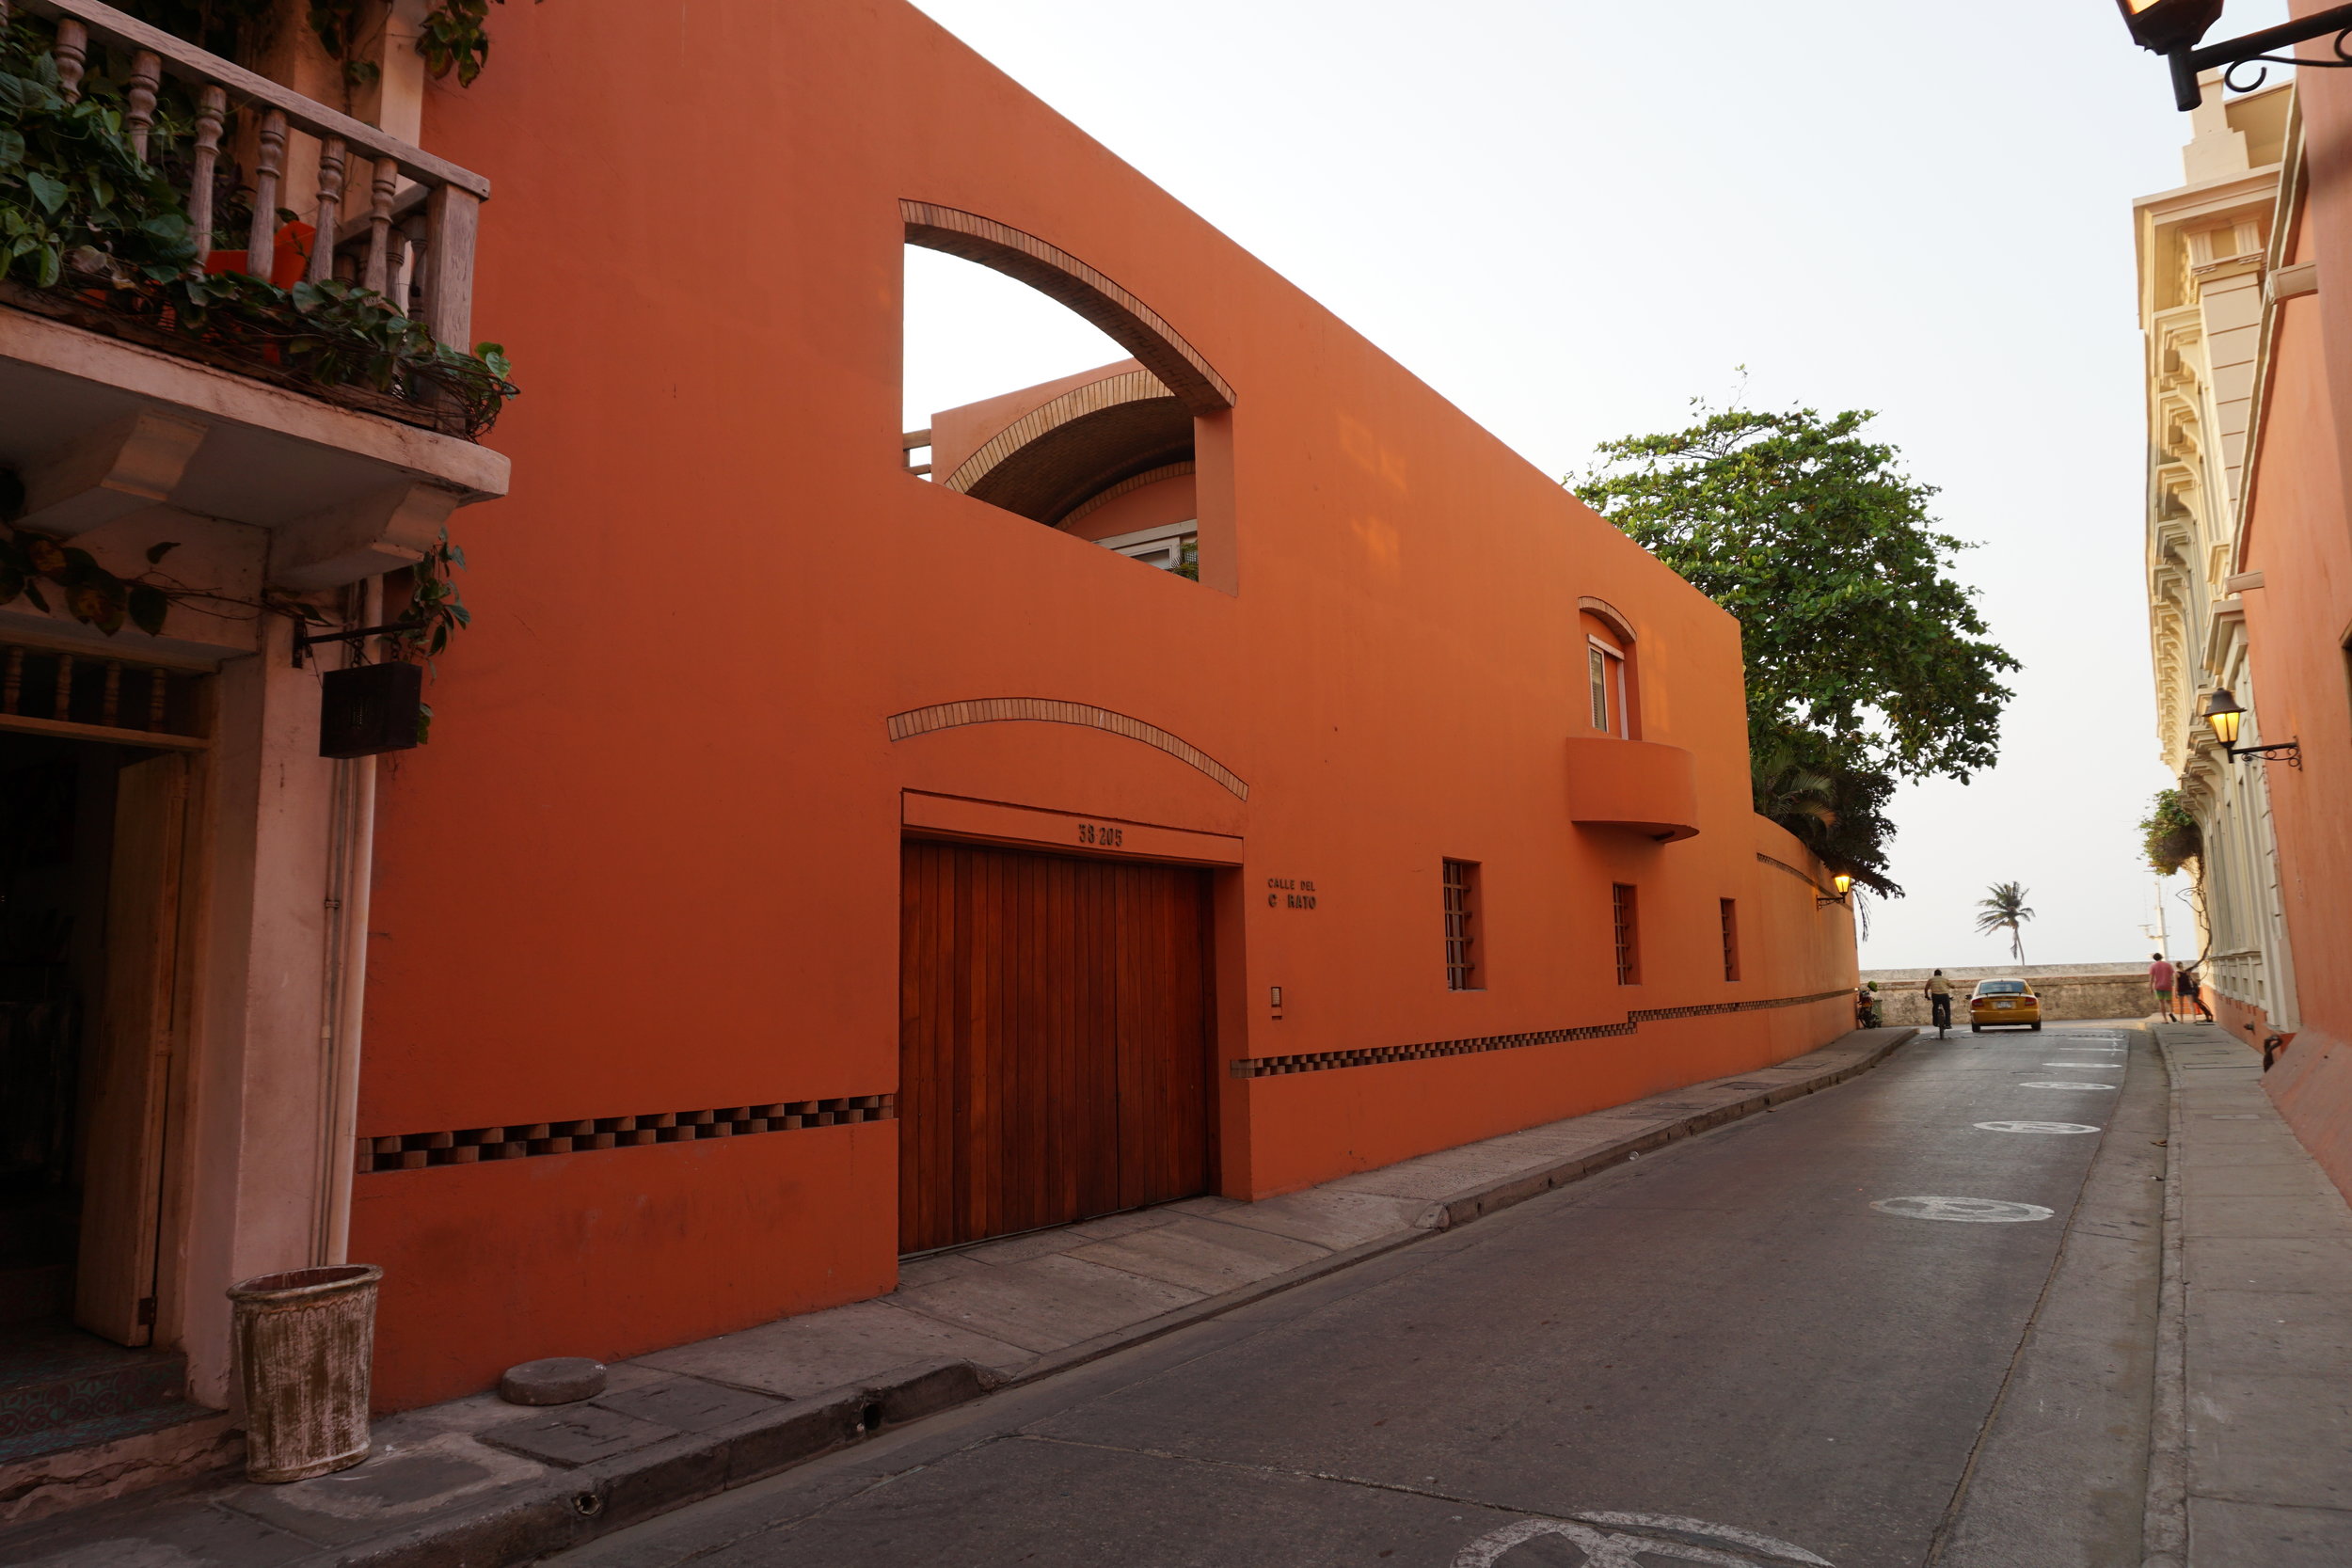 Orange outside wall of a large house